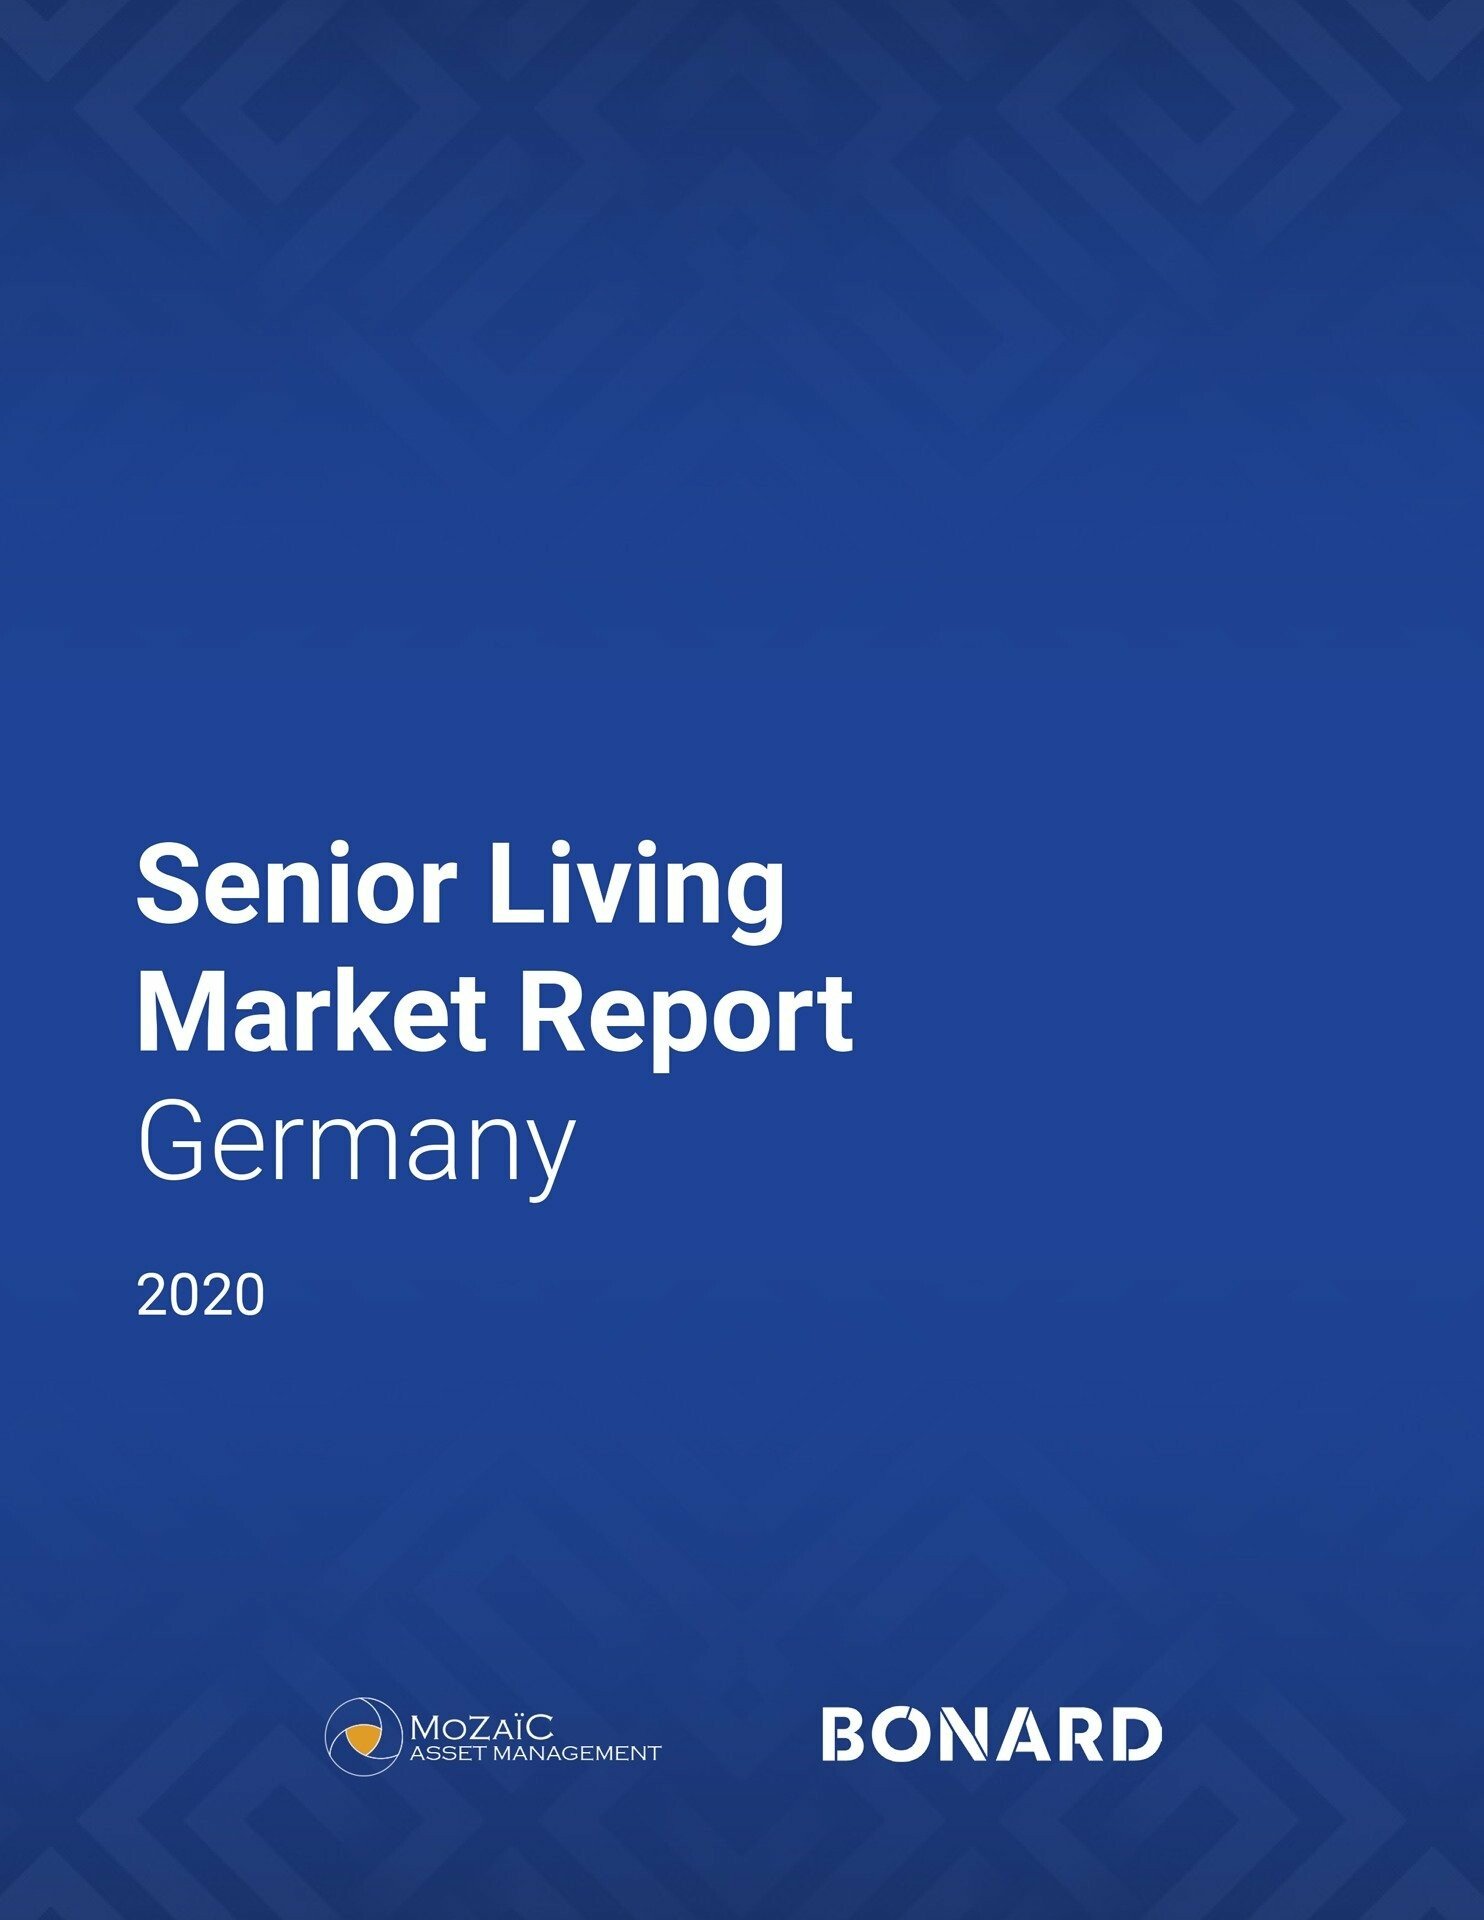 Senior-Living-Market-Report-Germany-DRAFT-1